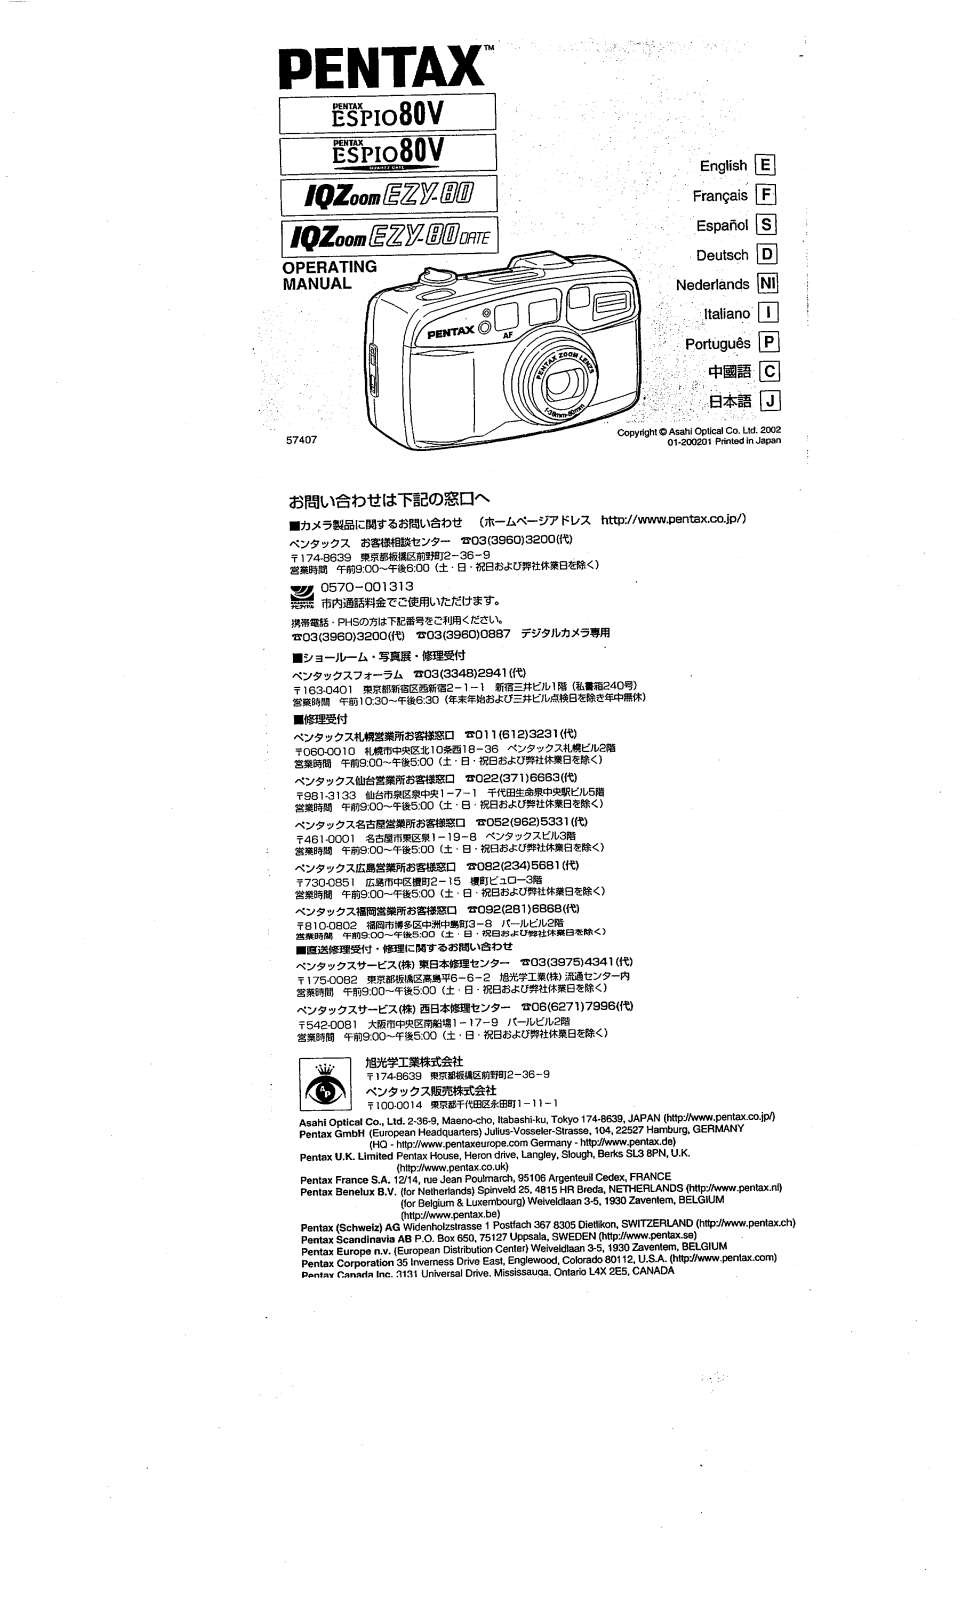 Pentax ESPIO 80V, IQZOOM EZY-80 operating manual